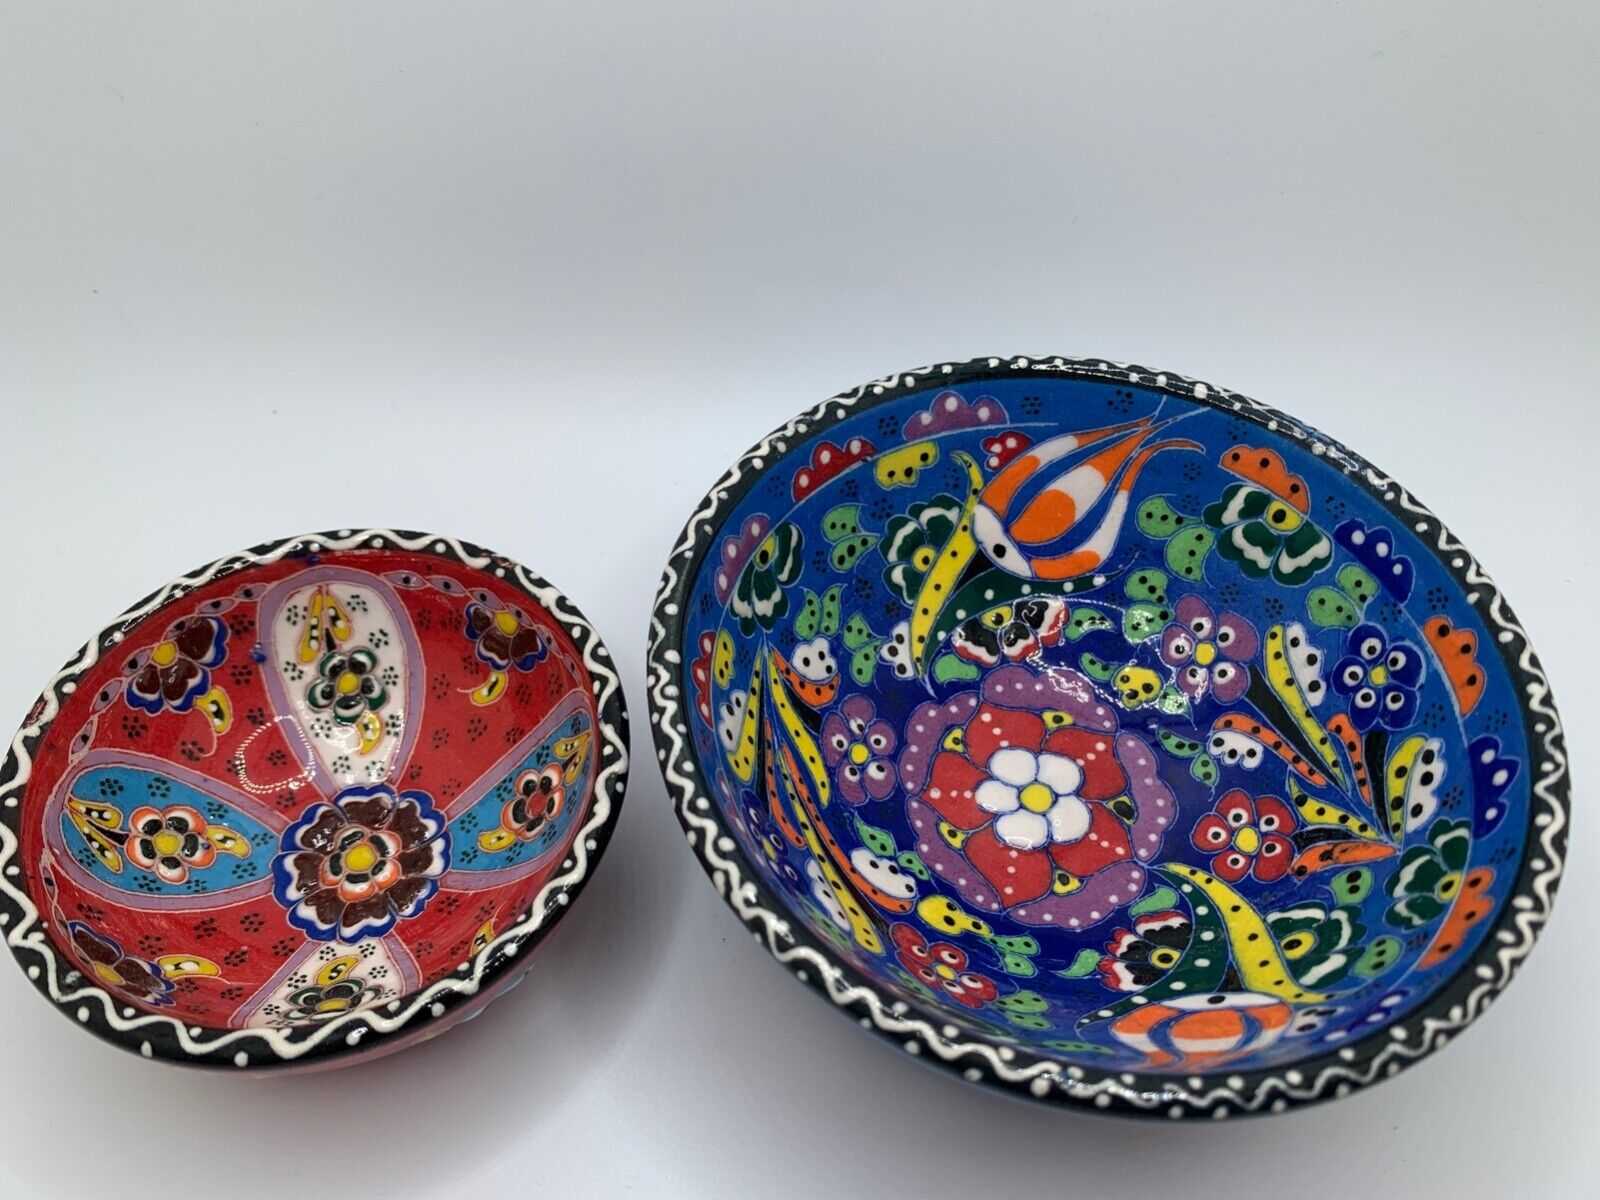 Lot of 2 Turkish Ceramic Trinket Bowl Hand Painted Decorative Design Red & Blue